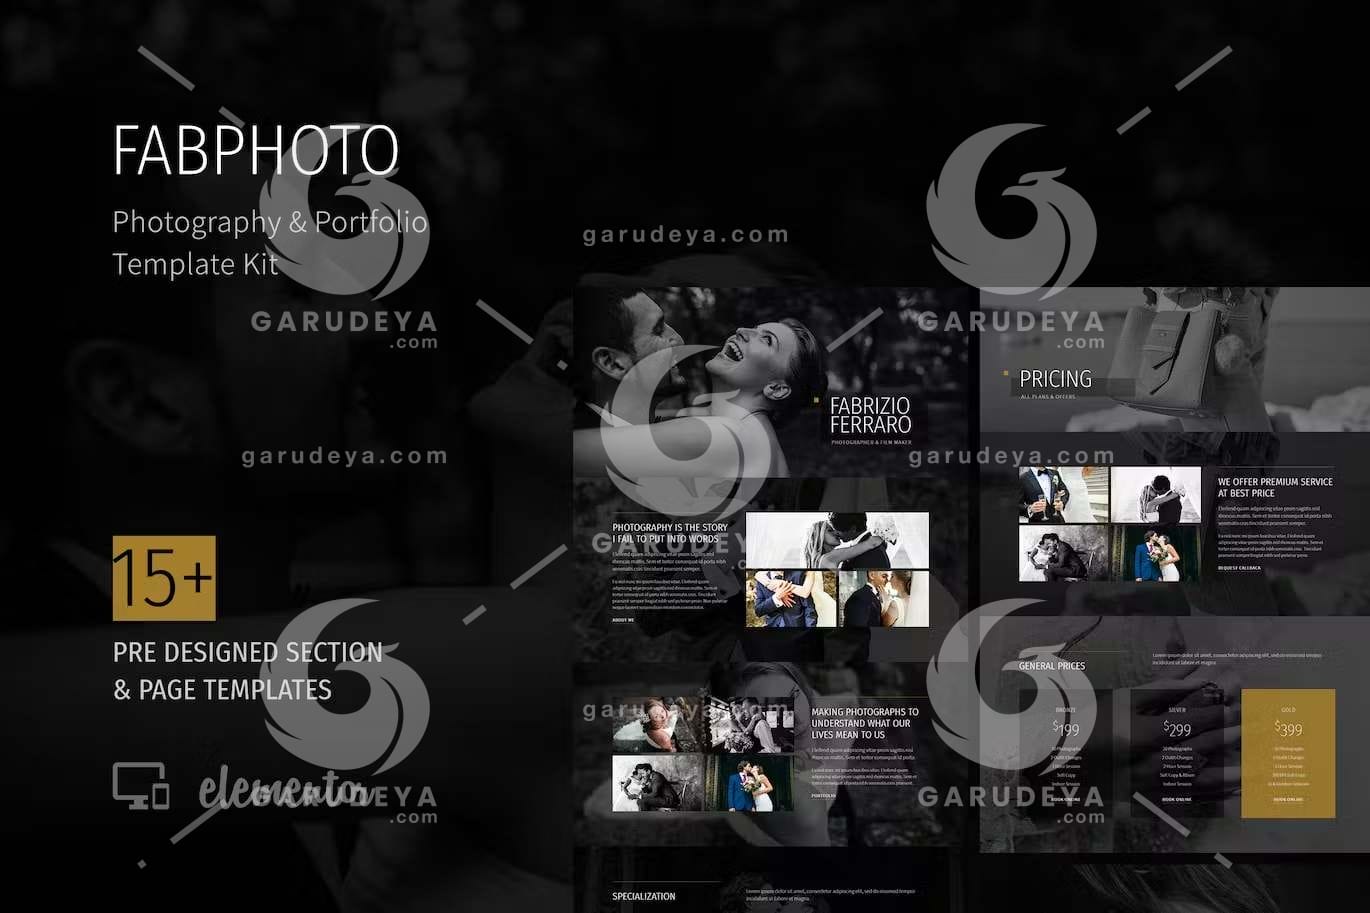 FabPhoto – Photography and Portfolio Template Kit